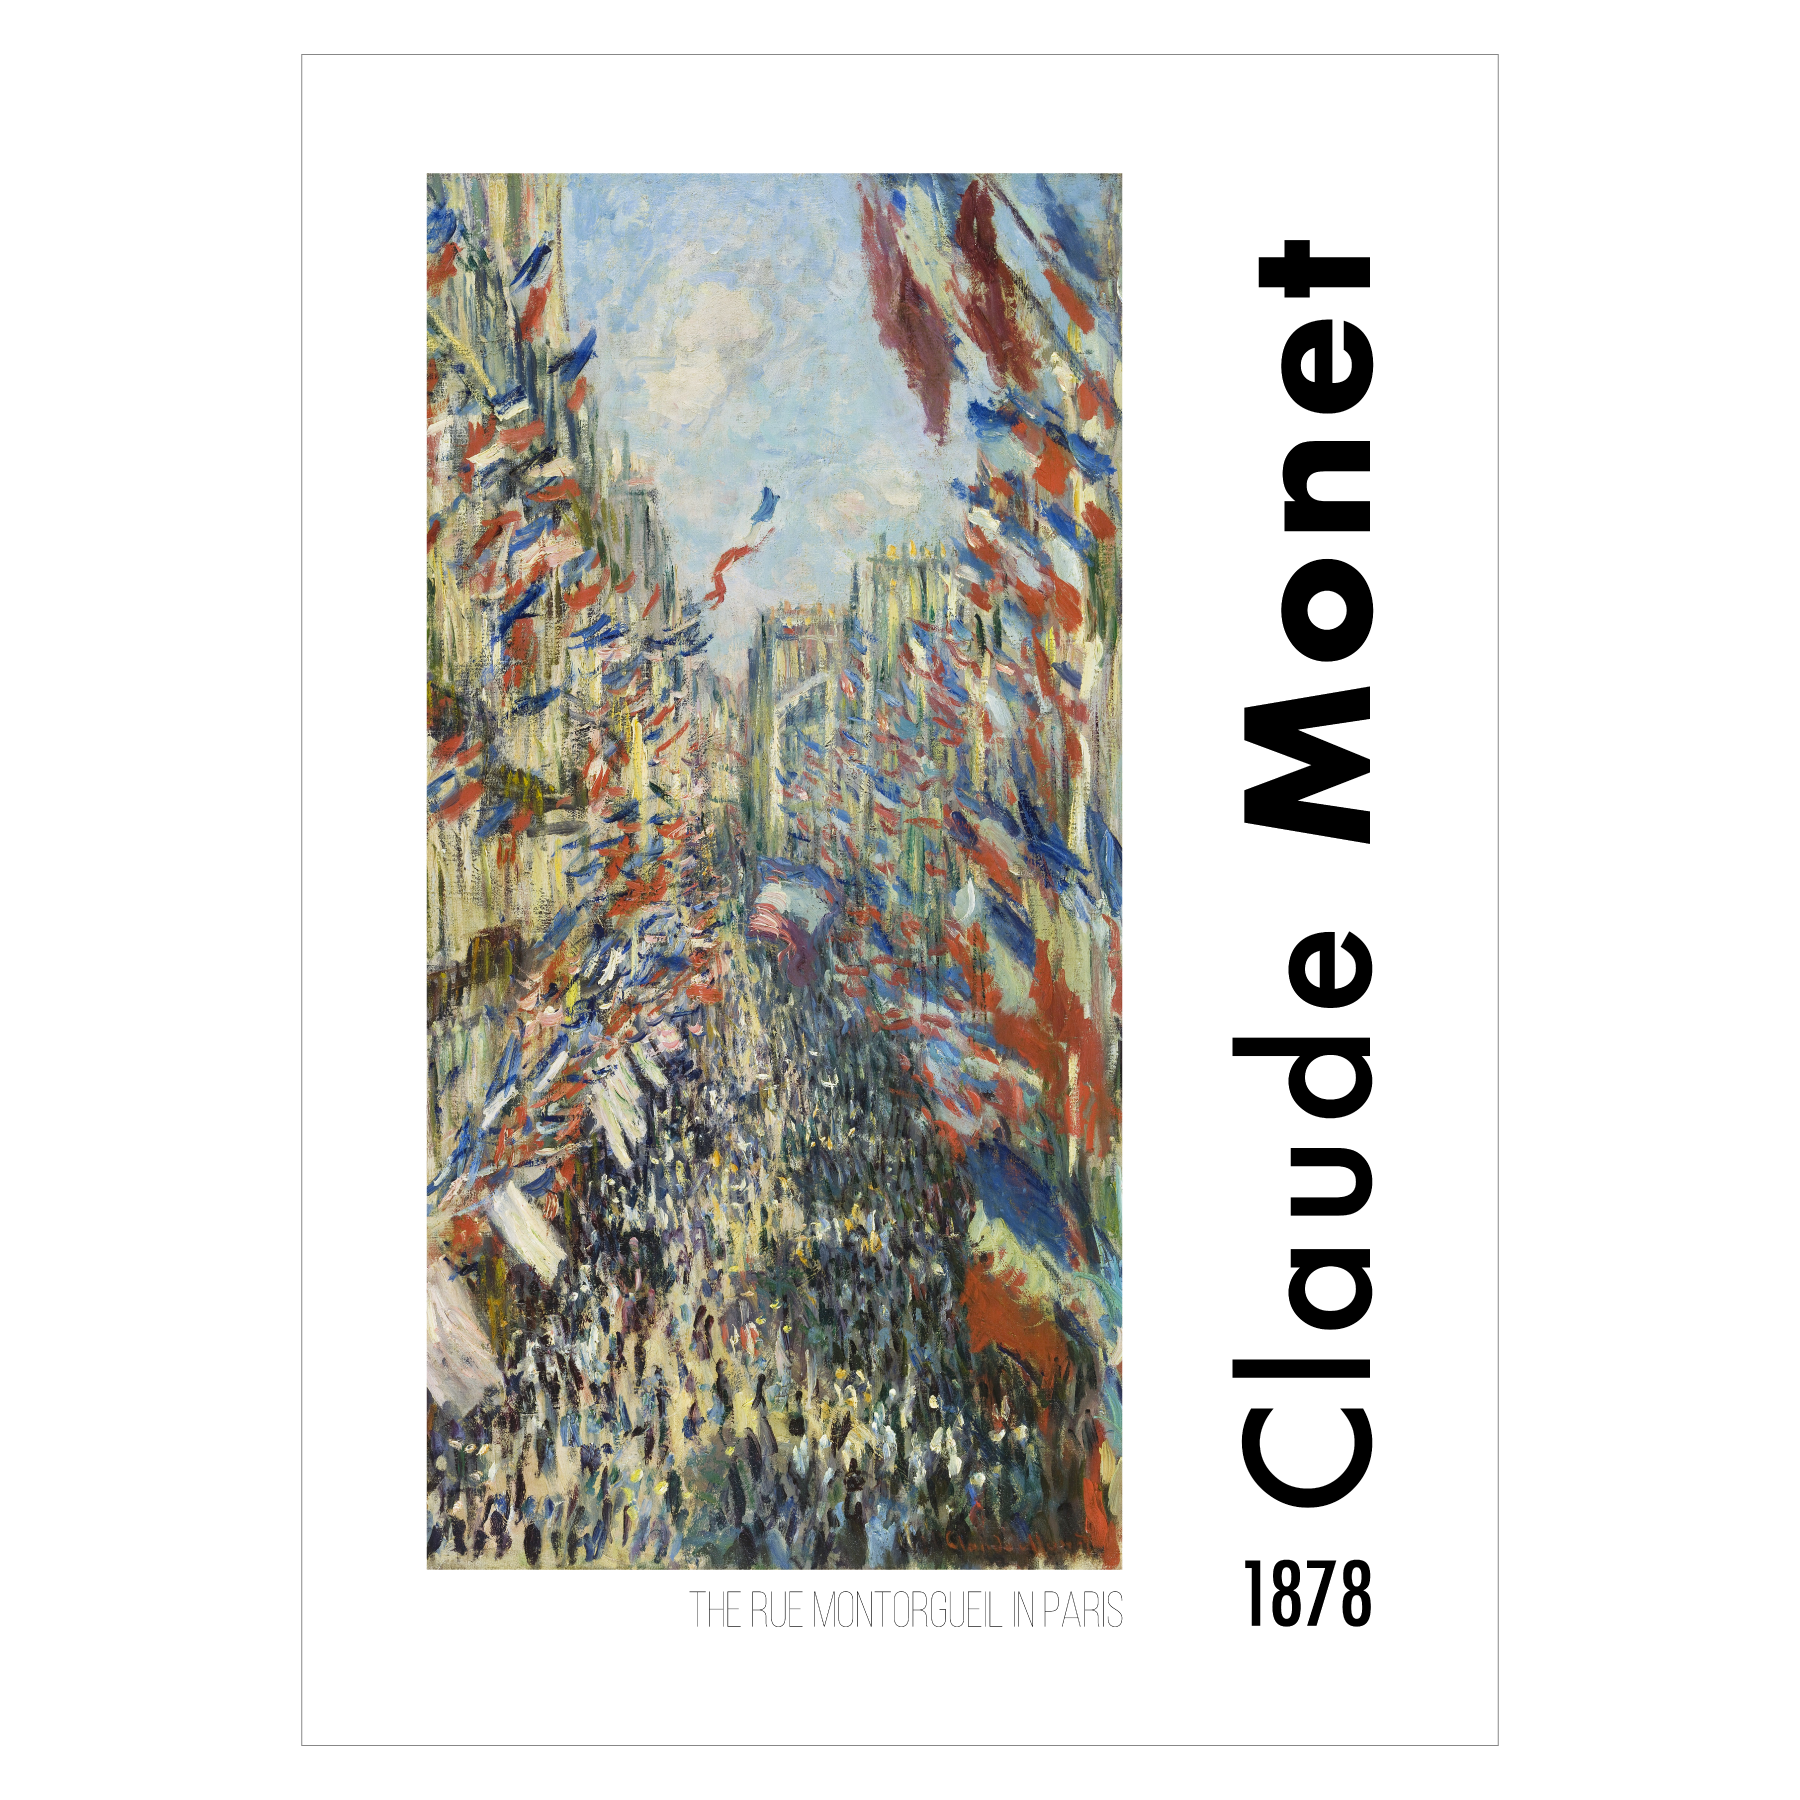 Kunstplakat med Monets "The Rue Montorgueil in Paris"